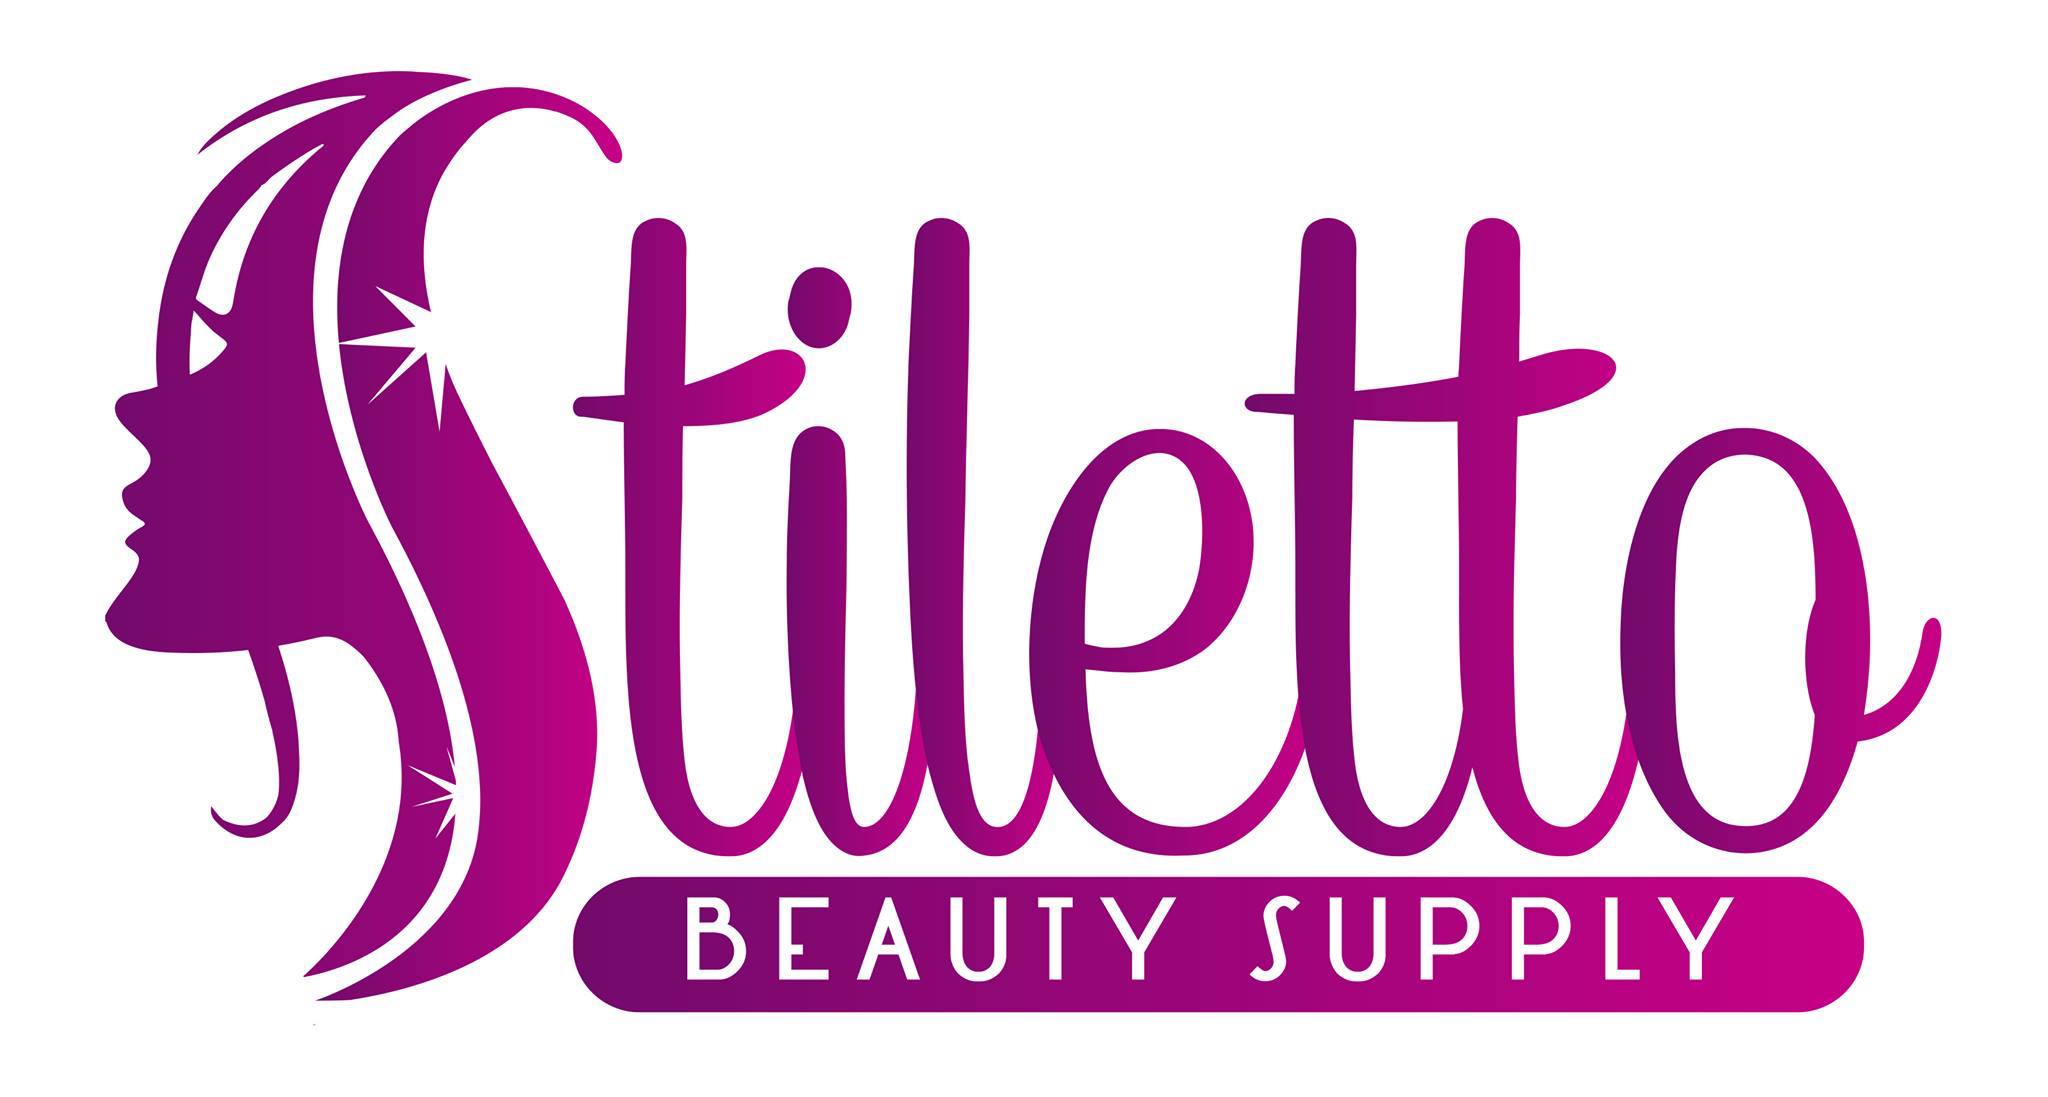 Stiletto Beauty Supply